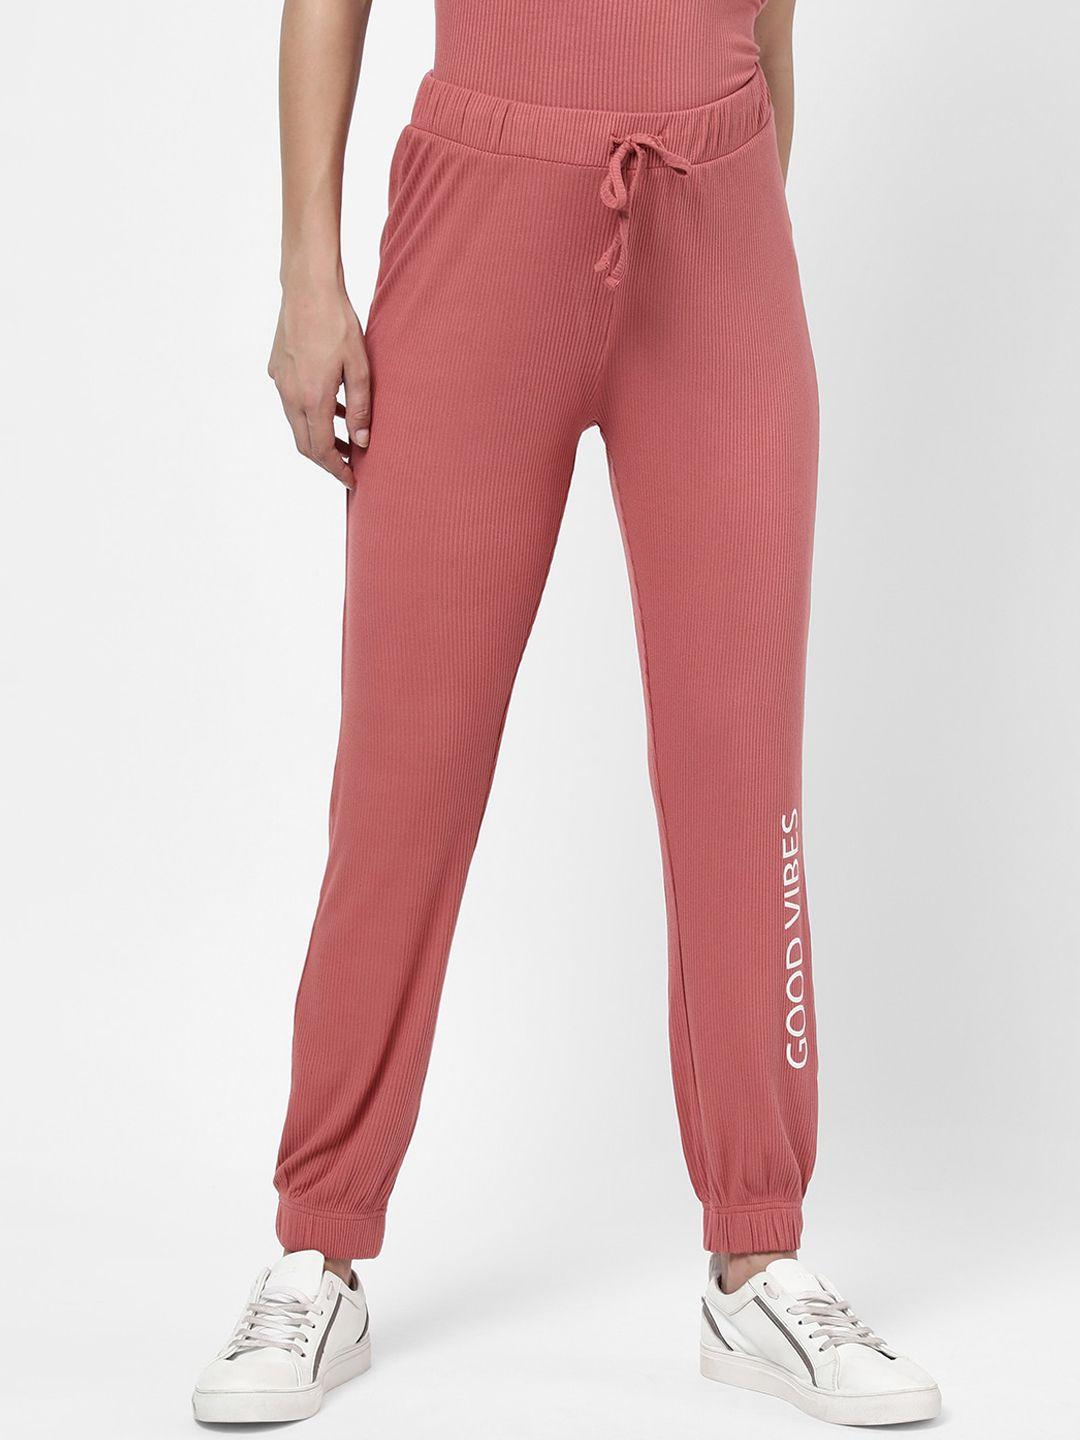 r&b women pink joggers trousers